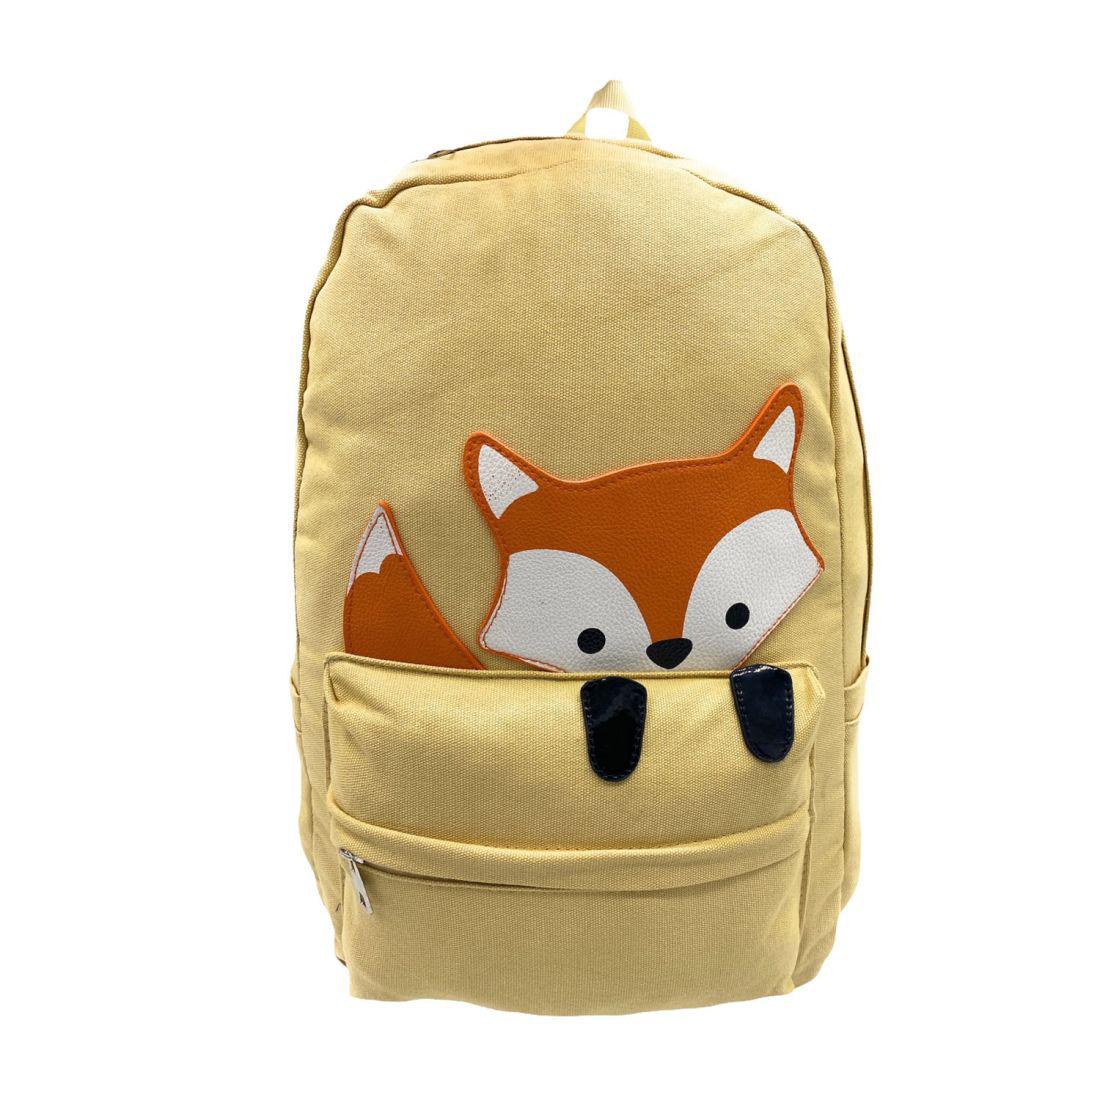 Empire Cove Canvas School Backpack Peeking Fox Book Bag Laptop Bags Travel